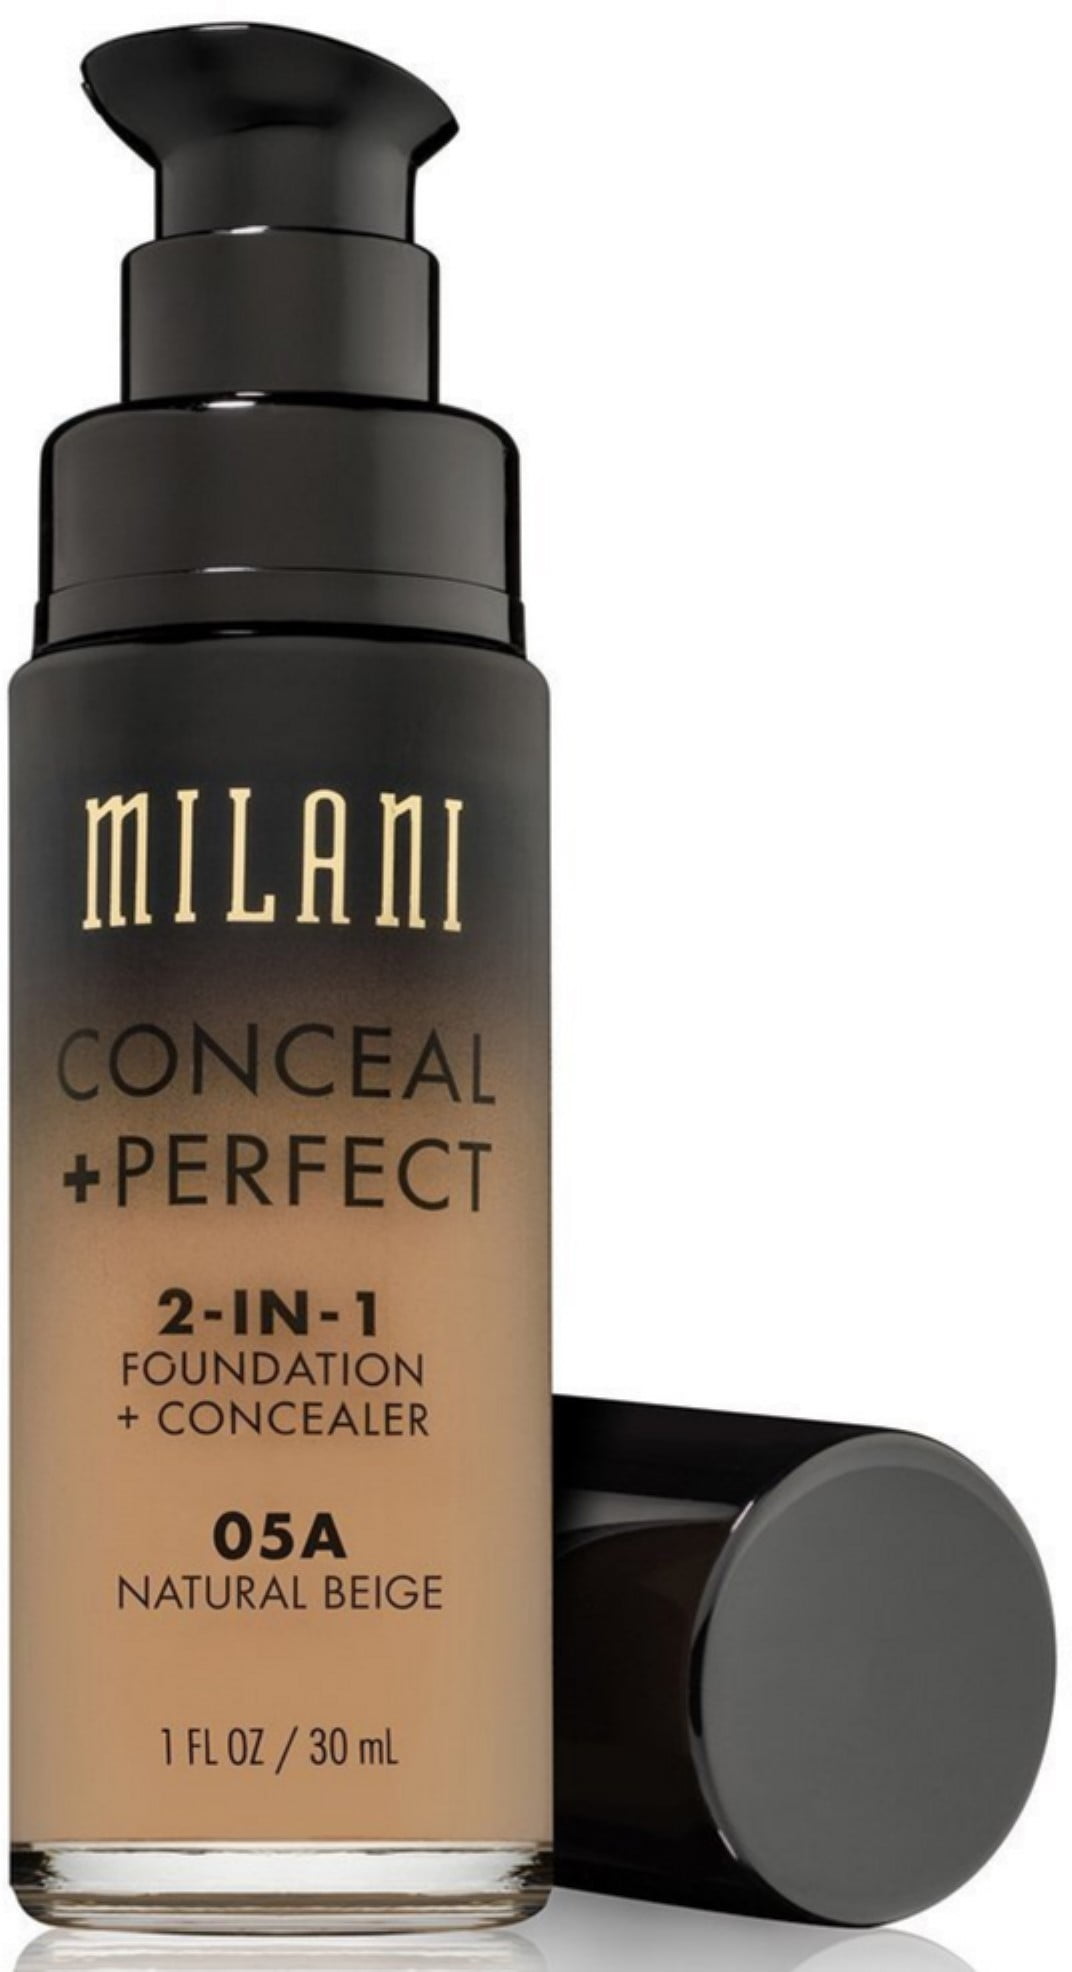 Milani Conceal + Perfect 2-in-1 Foundation Concealer, Natural Beige - Walmart.com